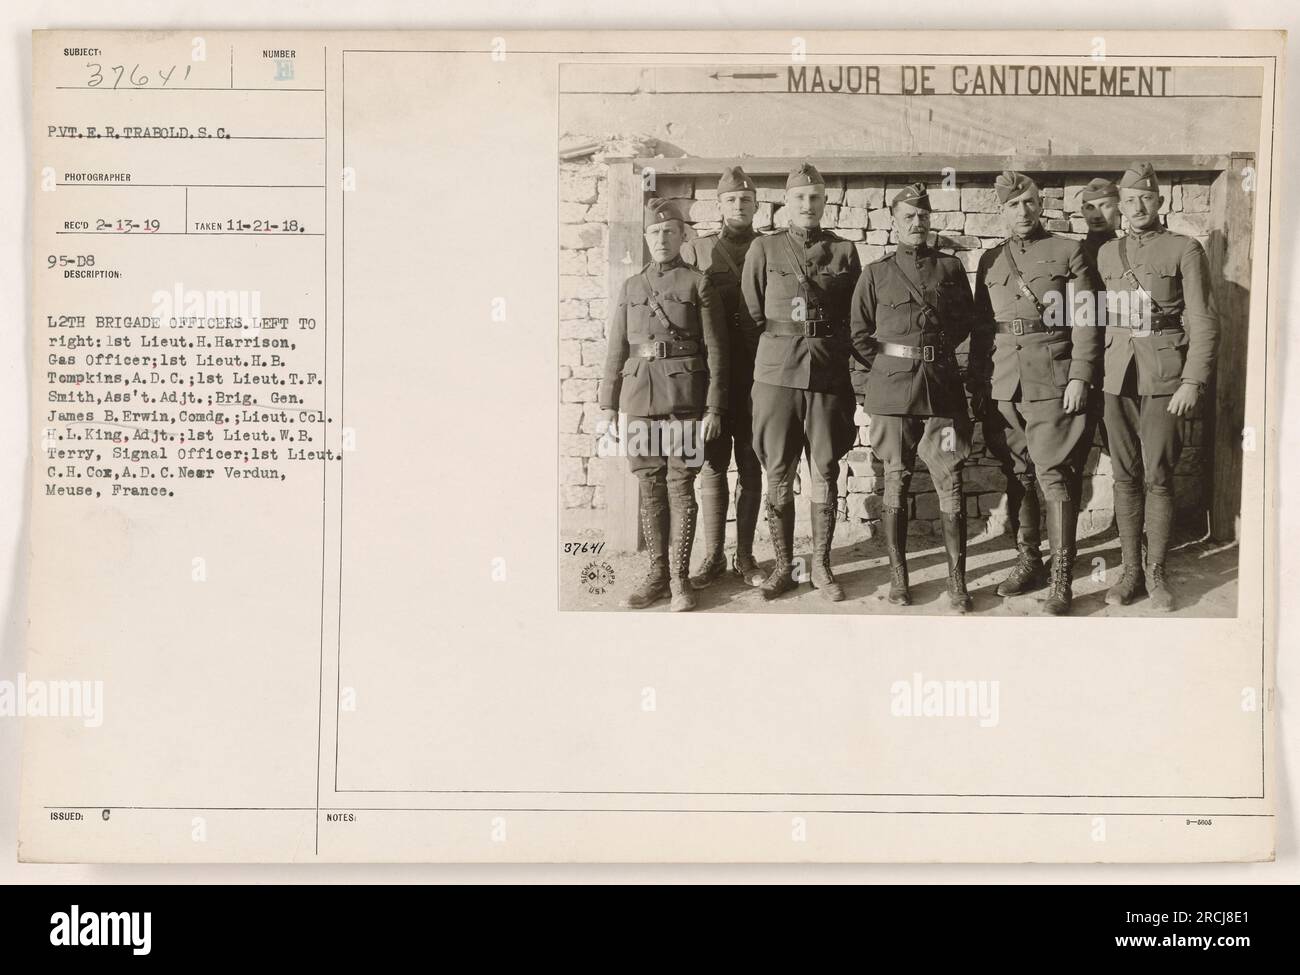 Offiziere der 12. Brigade, von links nach rechts: 1. Lieut. H. Harrison, Gas Officer; 1. Lieut. H. B. Tompkins, A. D.C.; 1. Lieut. T. F. Smith, Arschloch. Adjt.; Brigg. General James B. Erwin, Comdg., Lieut. Oberstleutnant H.L. King, Adjt.; 1. Lieut. W. B. Terry, Signaloffizier; 1. Lieut. C.H. Cox, A.D. C. Neer Verdun, Meuse, Frankreich. Aufgenommen am 21. November 1918 von P.Vt. E. R.Trabold, offizieller Fotograf für die USA Signalkorps im Ersten Weltkrieg. Stockfoto